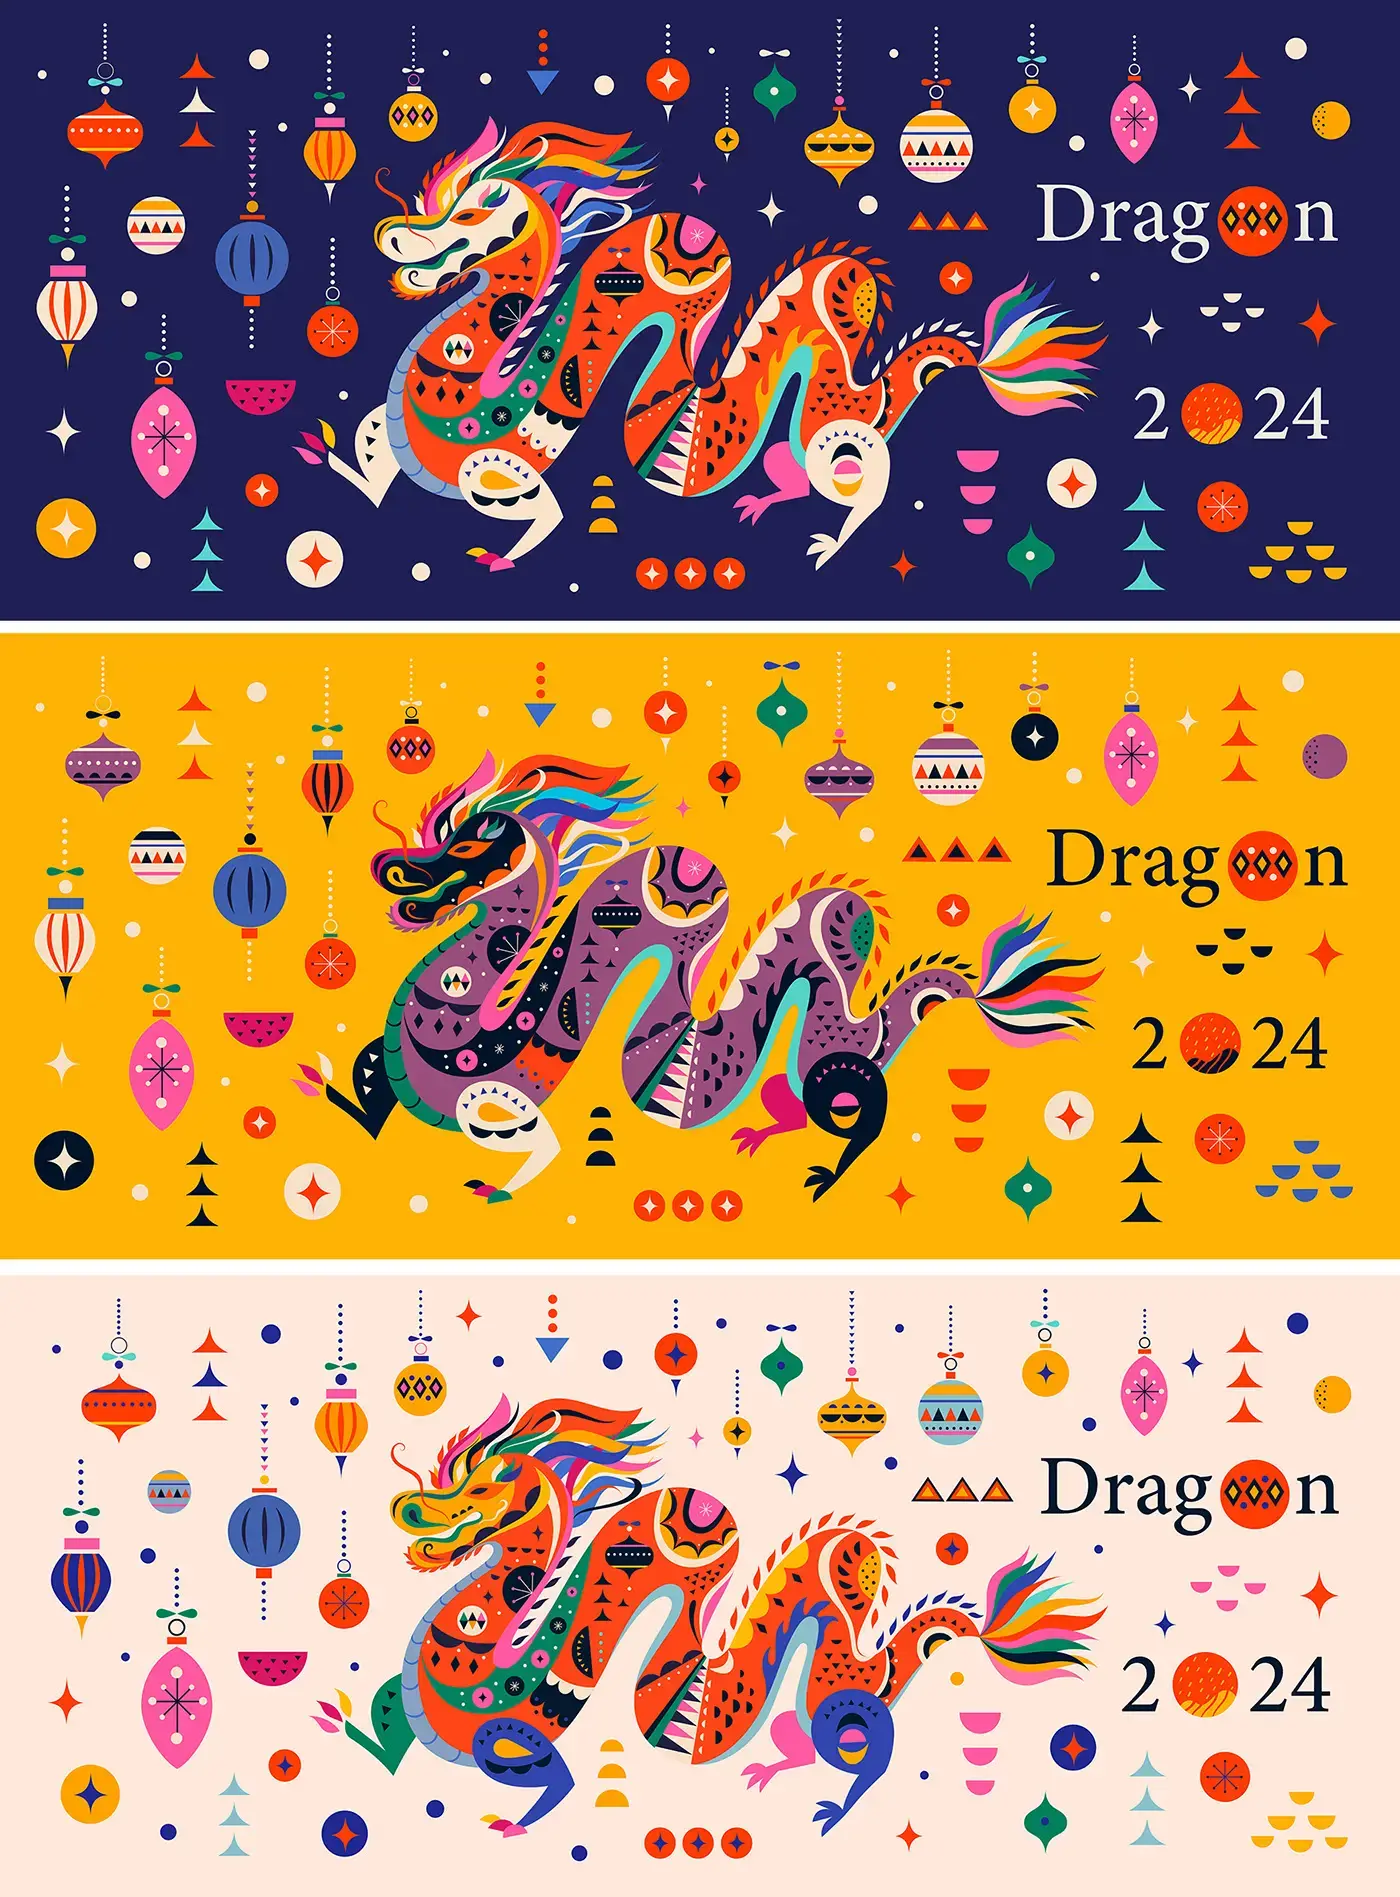 Blogduwebdesign inspiration creations nouvel an chinois dragon 2024 happy new year 2